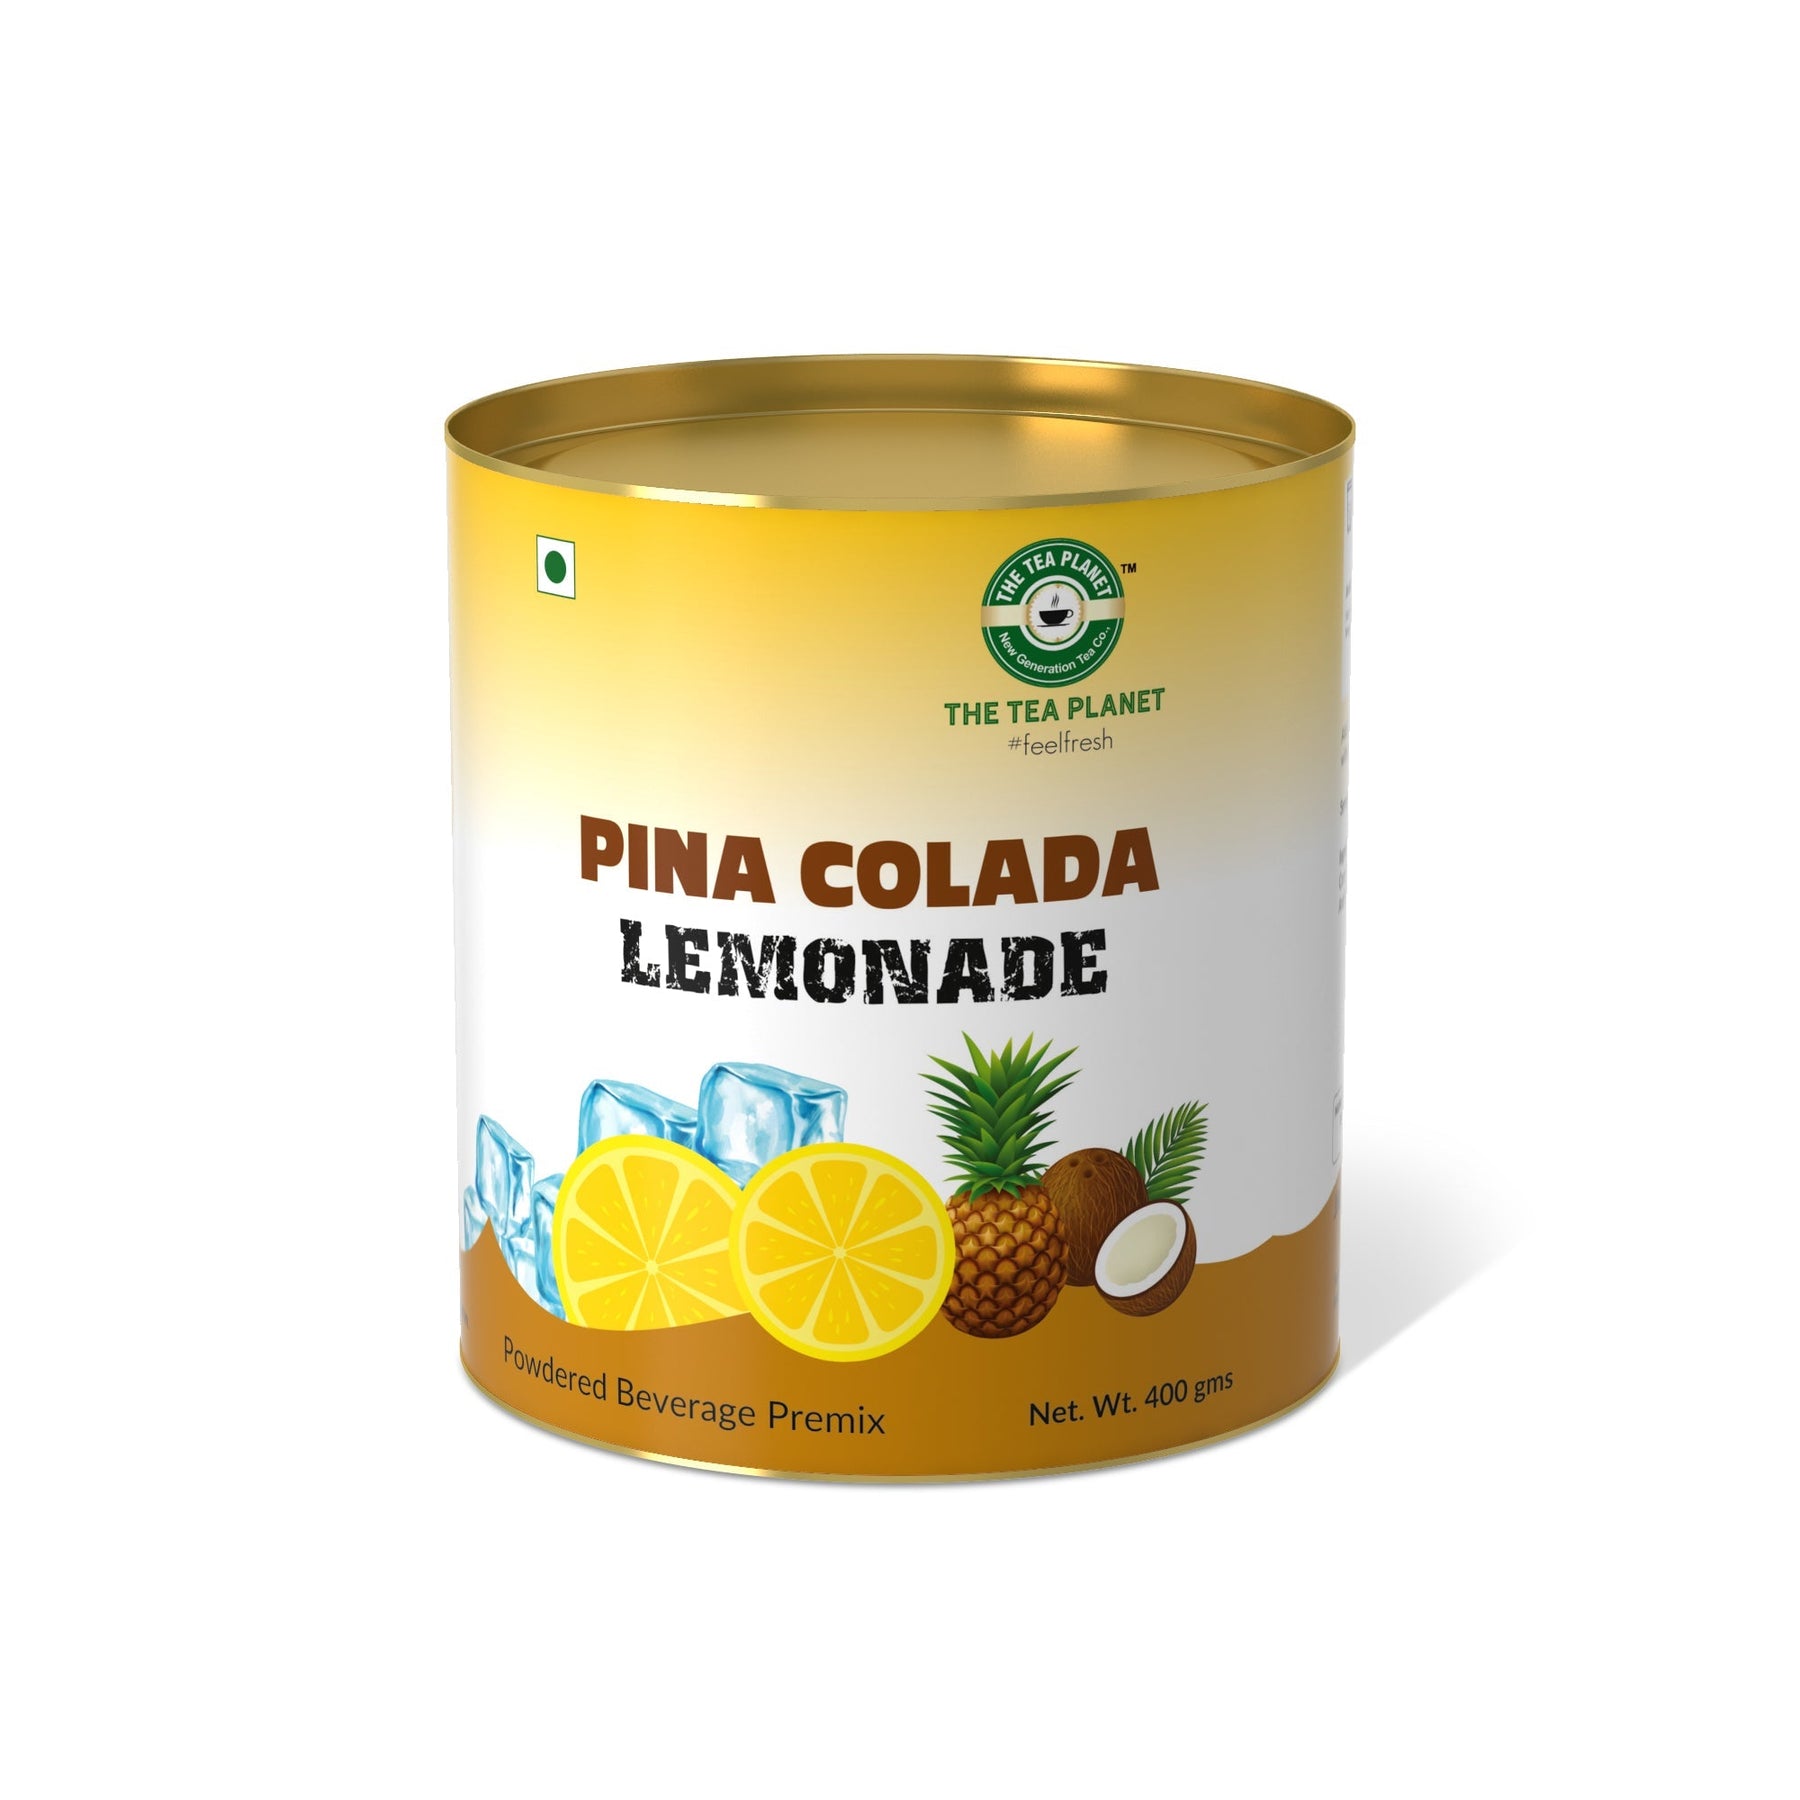 Pina Colada Lemonade Premix - 800 gms